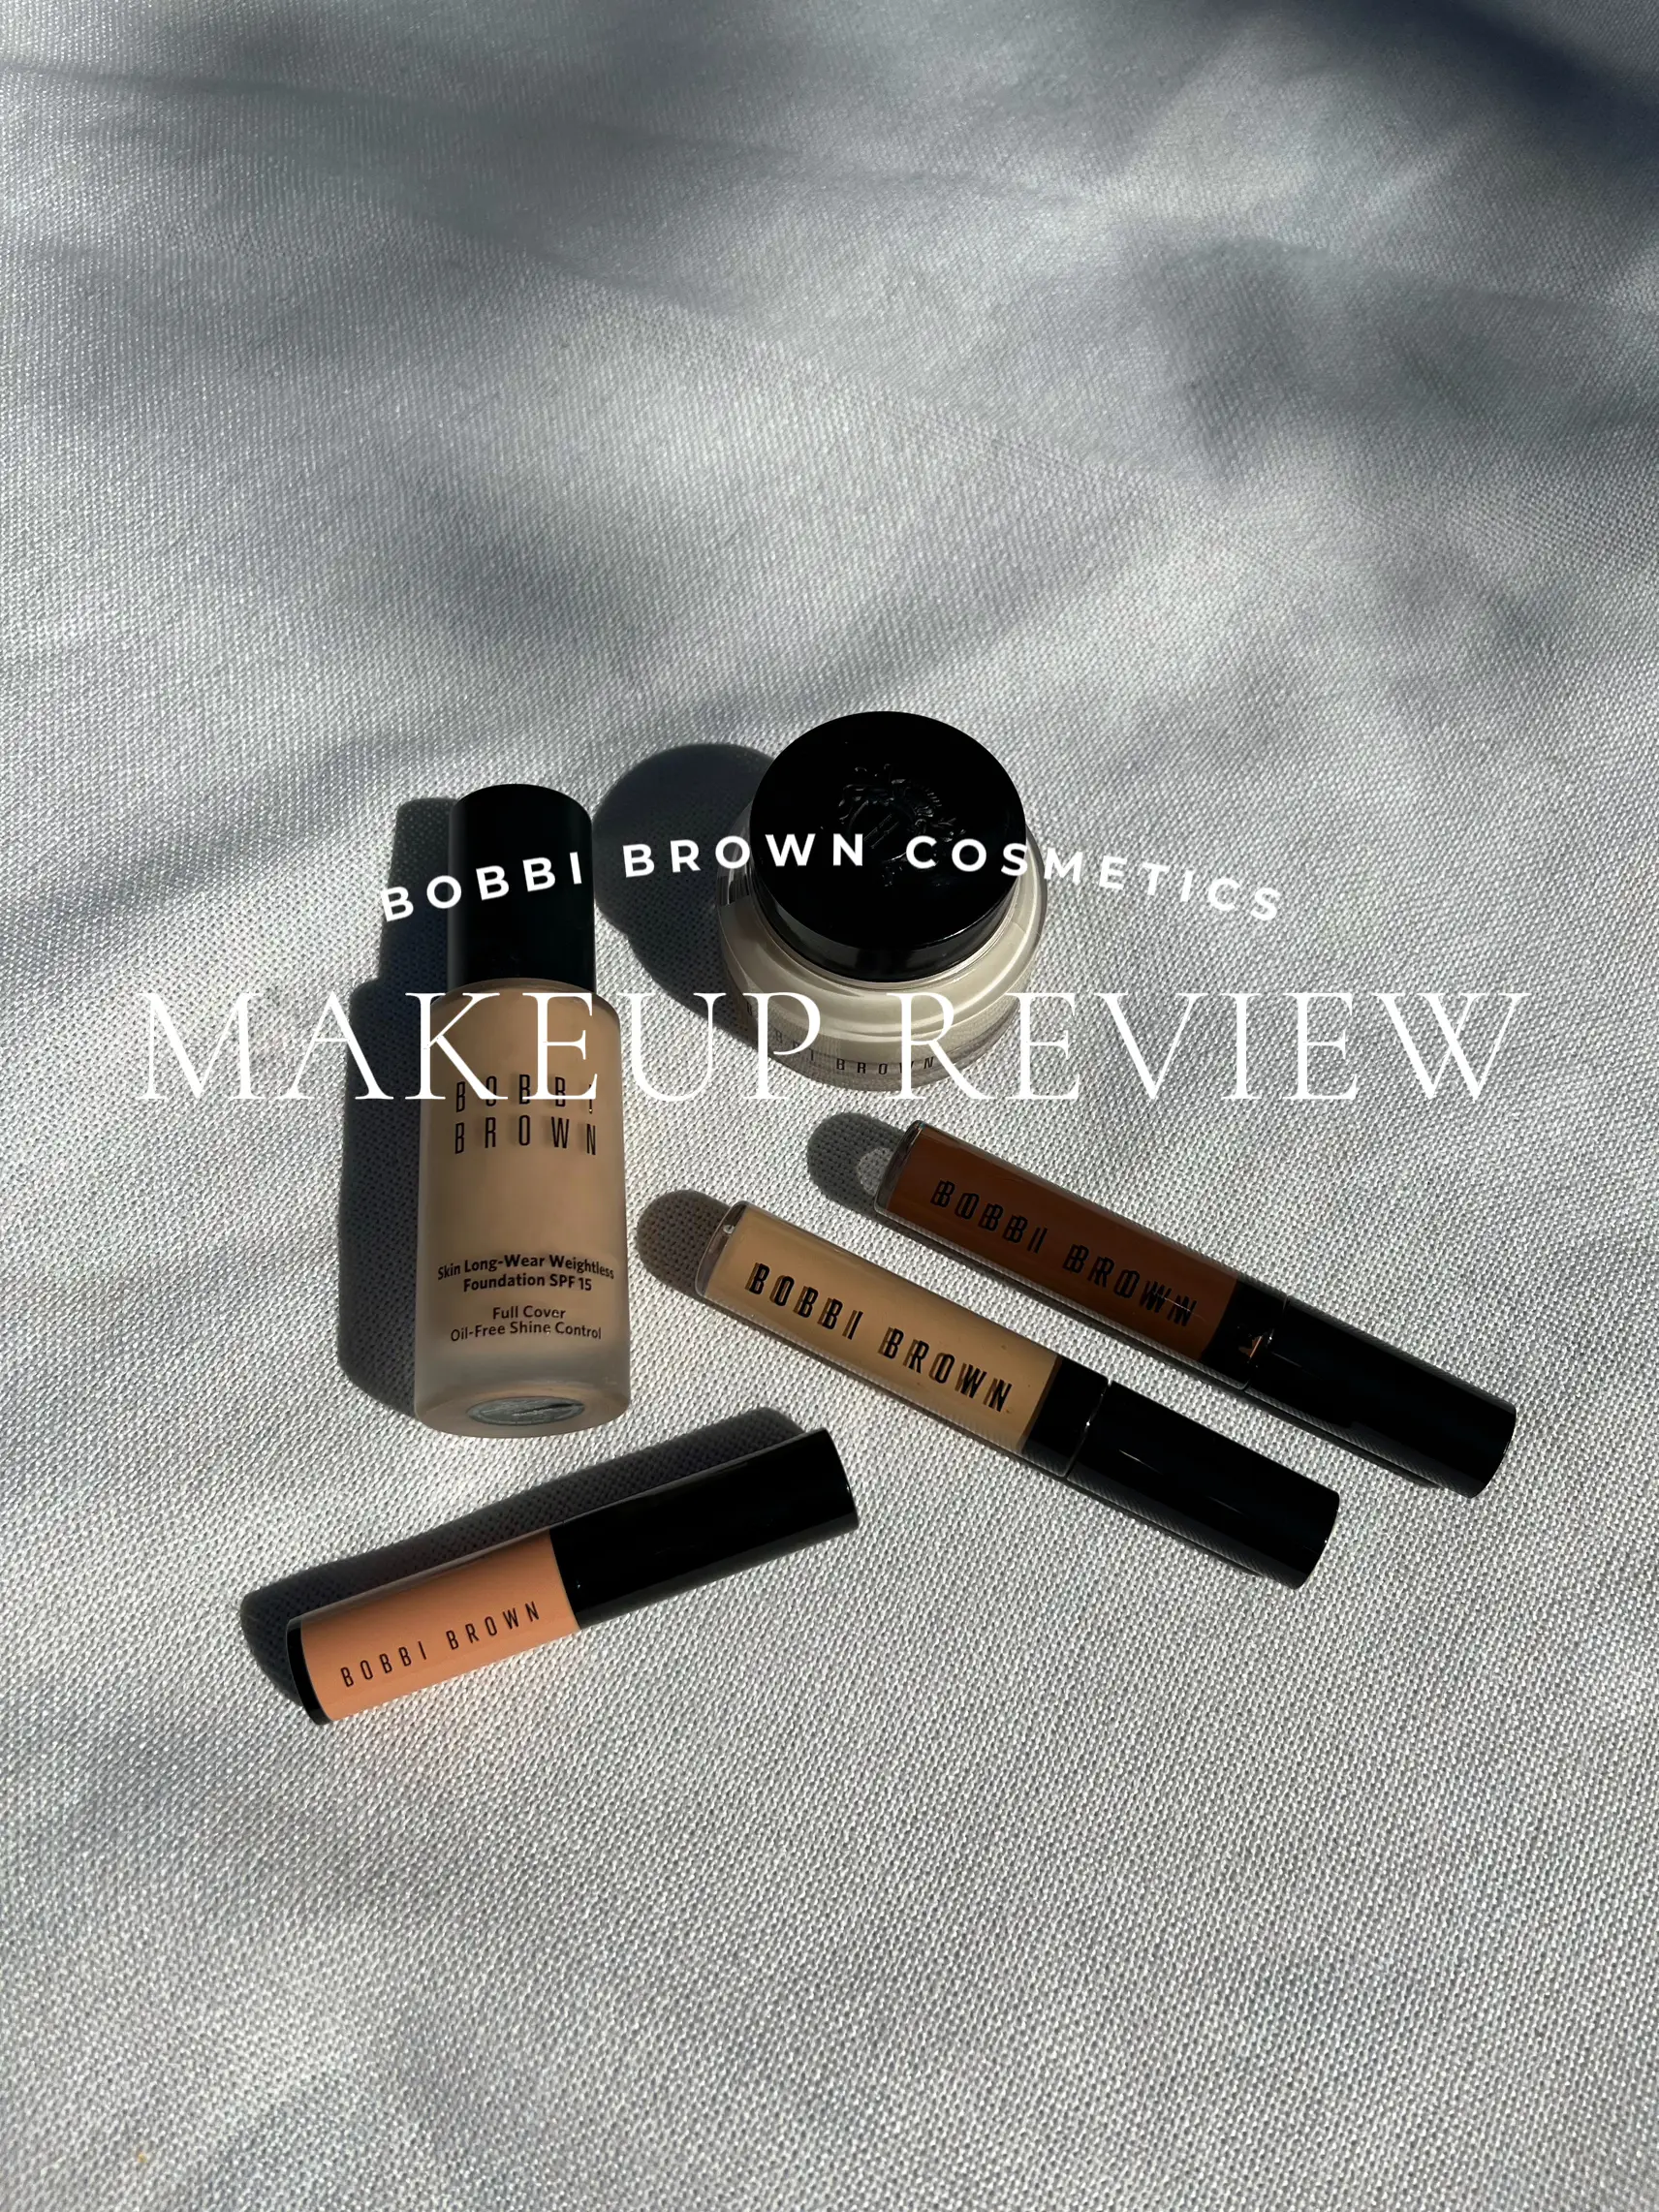 Bobbi Brown Makeup Review Is It Worth